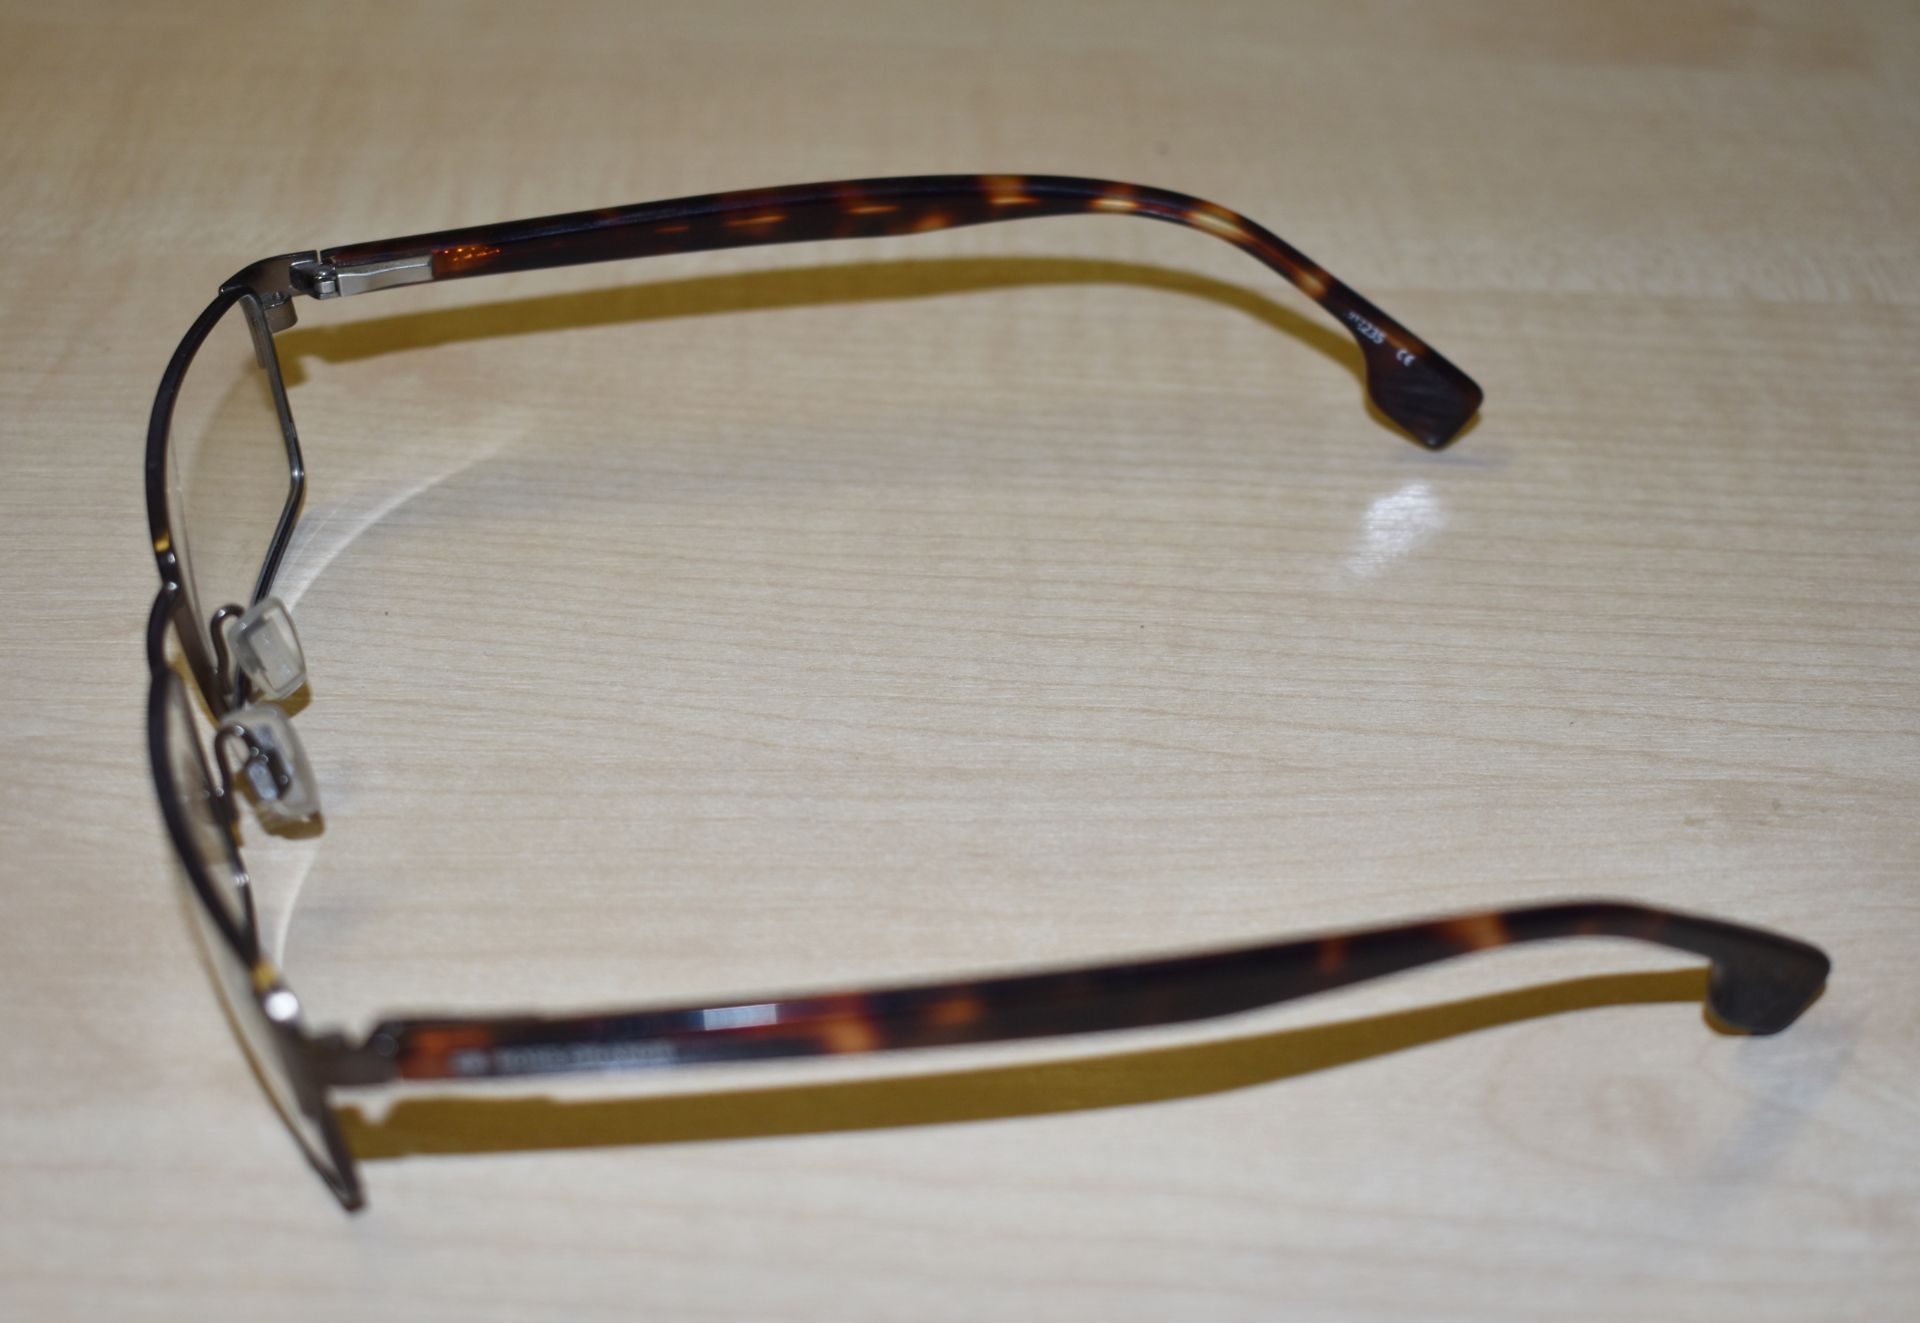 1 x Genuine BOSS ORANGE Spectacle Eye Glasses Frame - Ex Display Stock  - Ref: GTI193 - CL645 - - Image 3 of 11